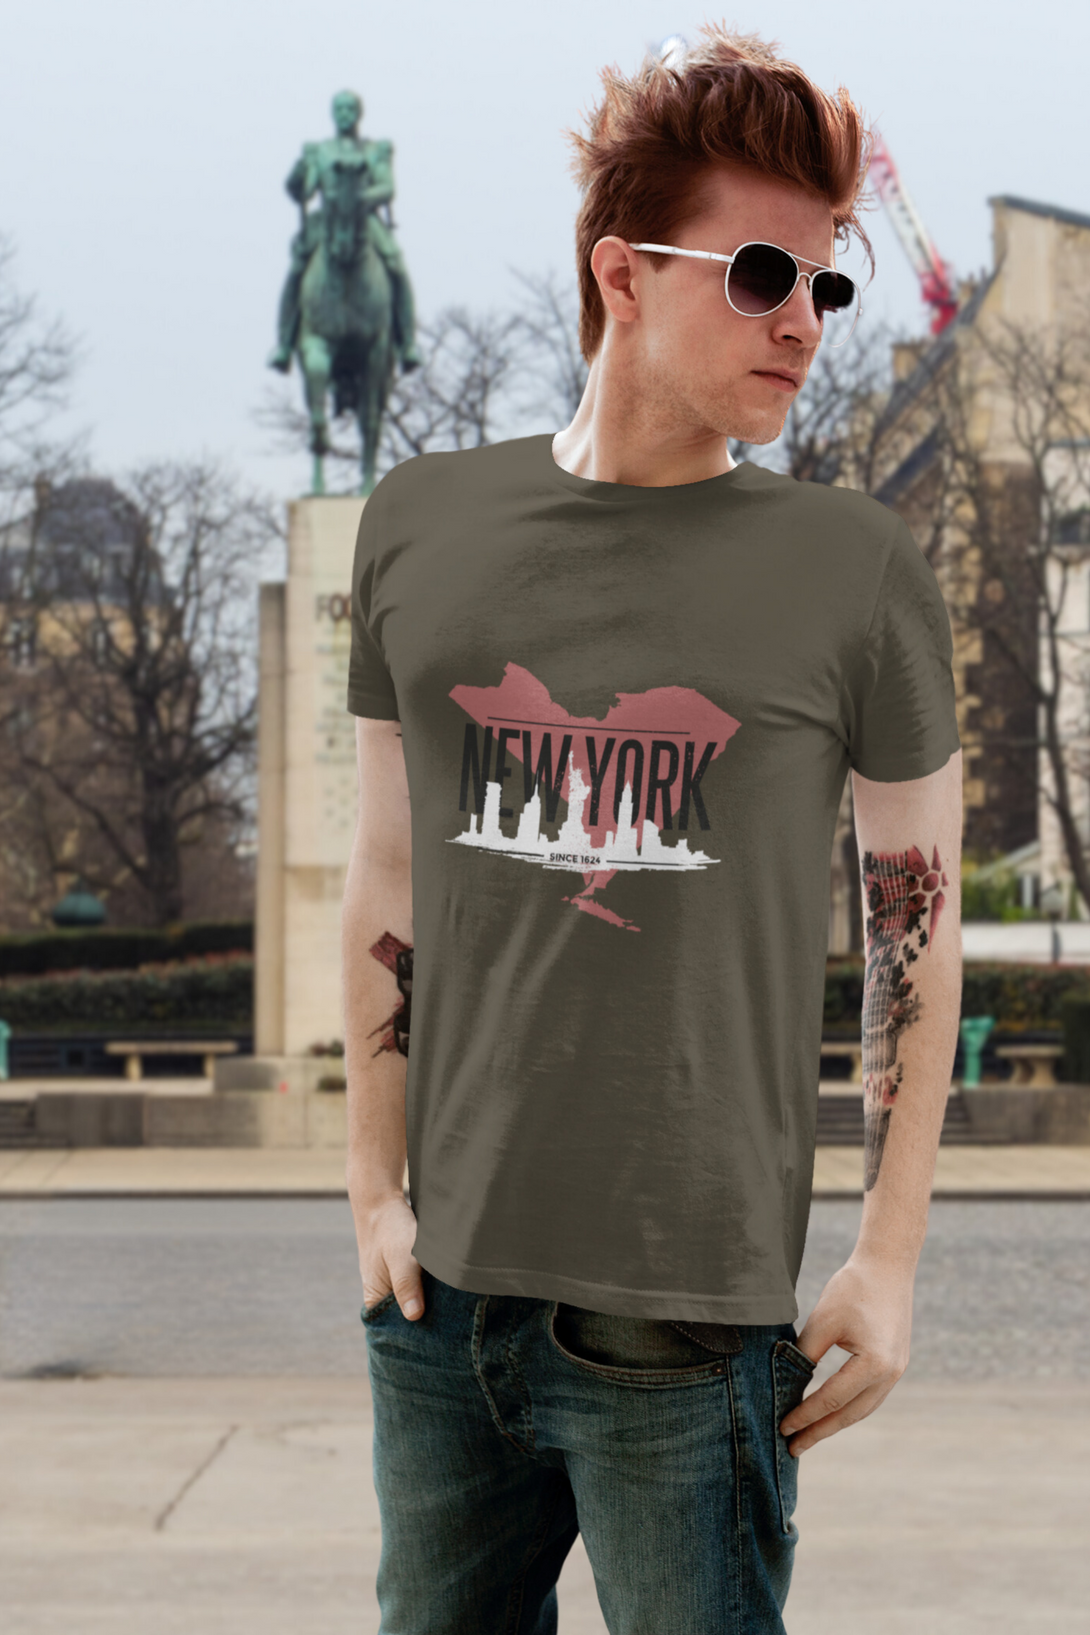 New York Skyline Printed T-Shirt For Men - WowWaves - 3